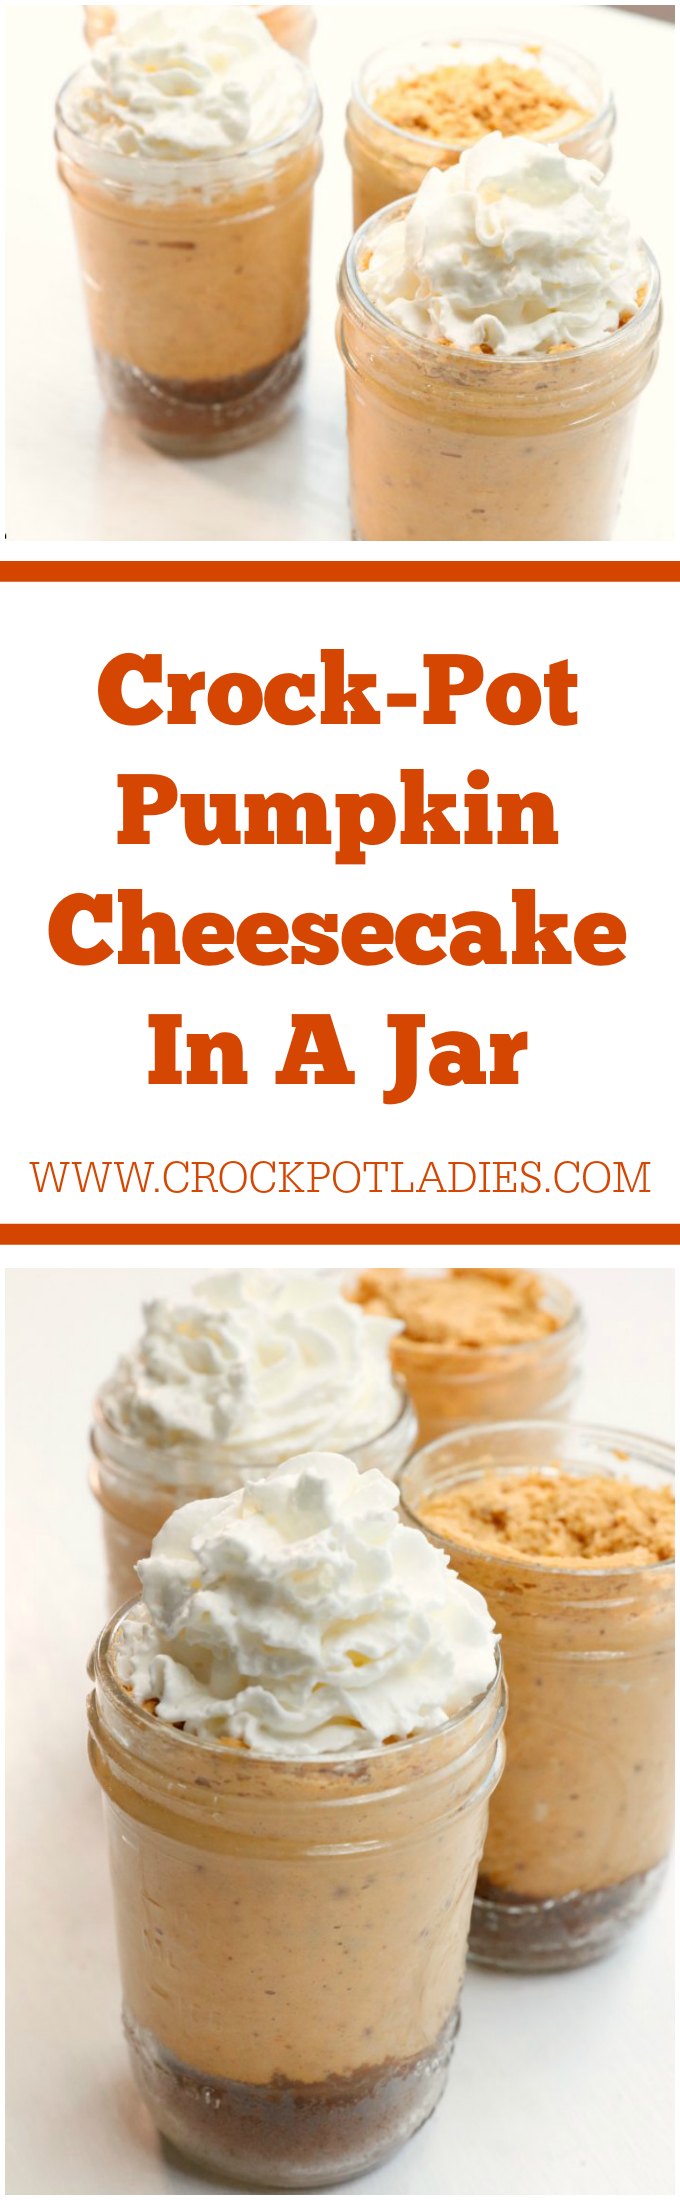 Crock-Pot Pumpkin Cheesecake In A Jar